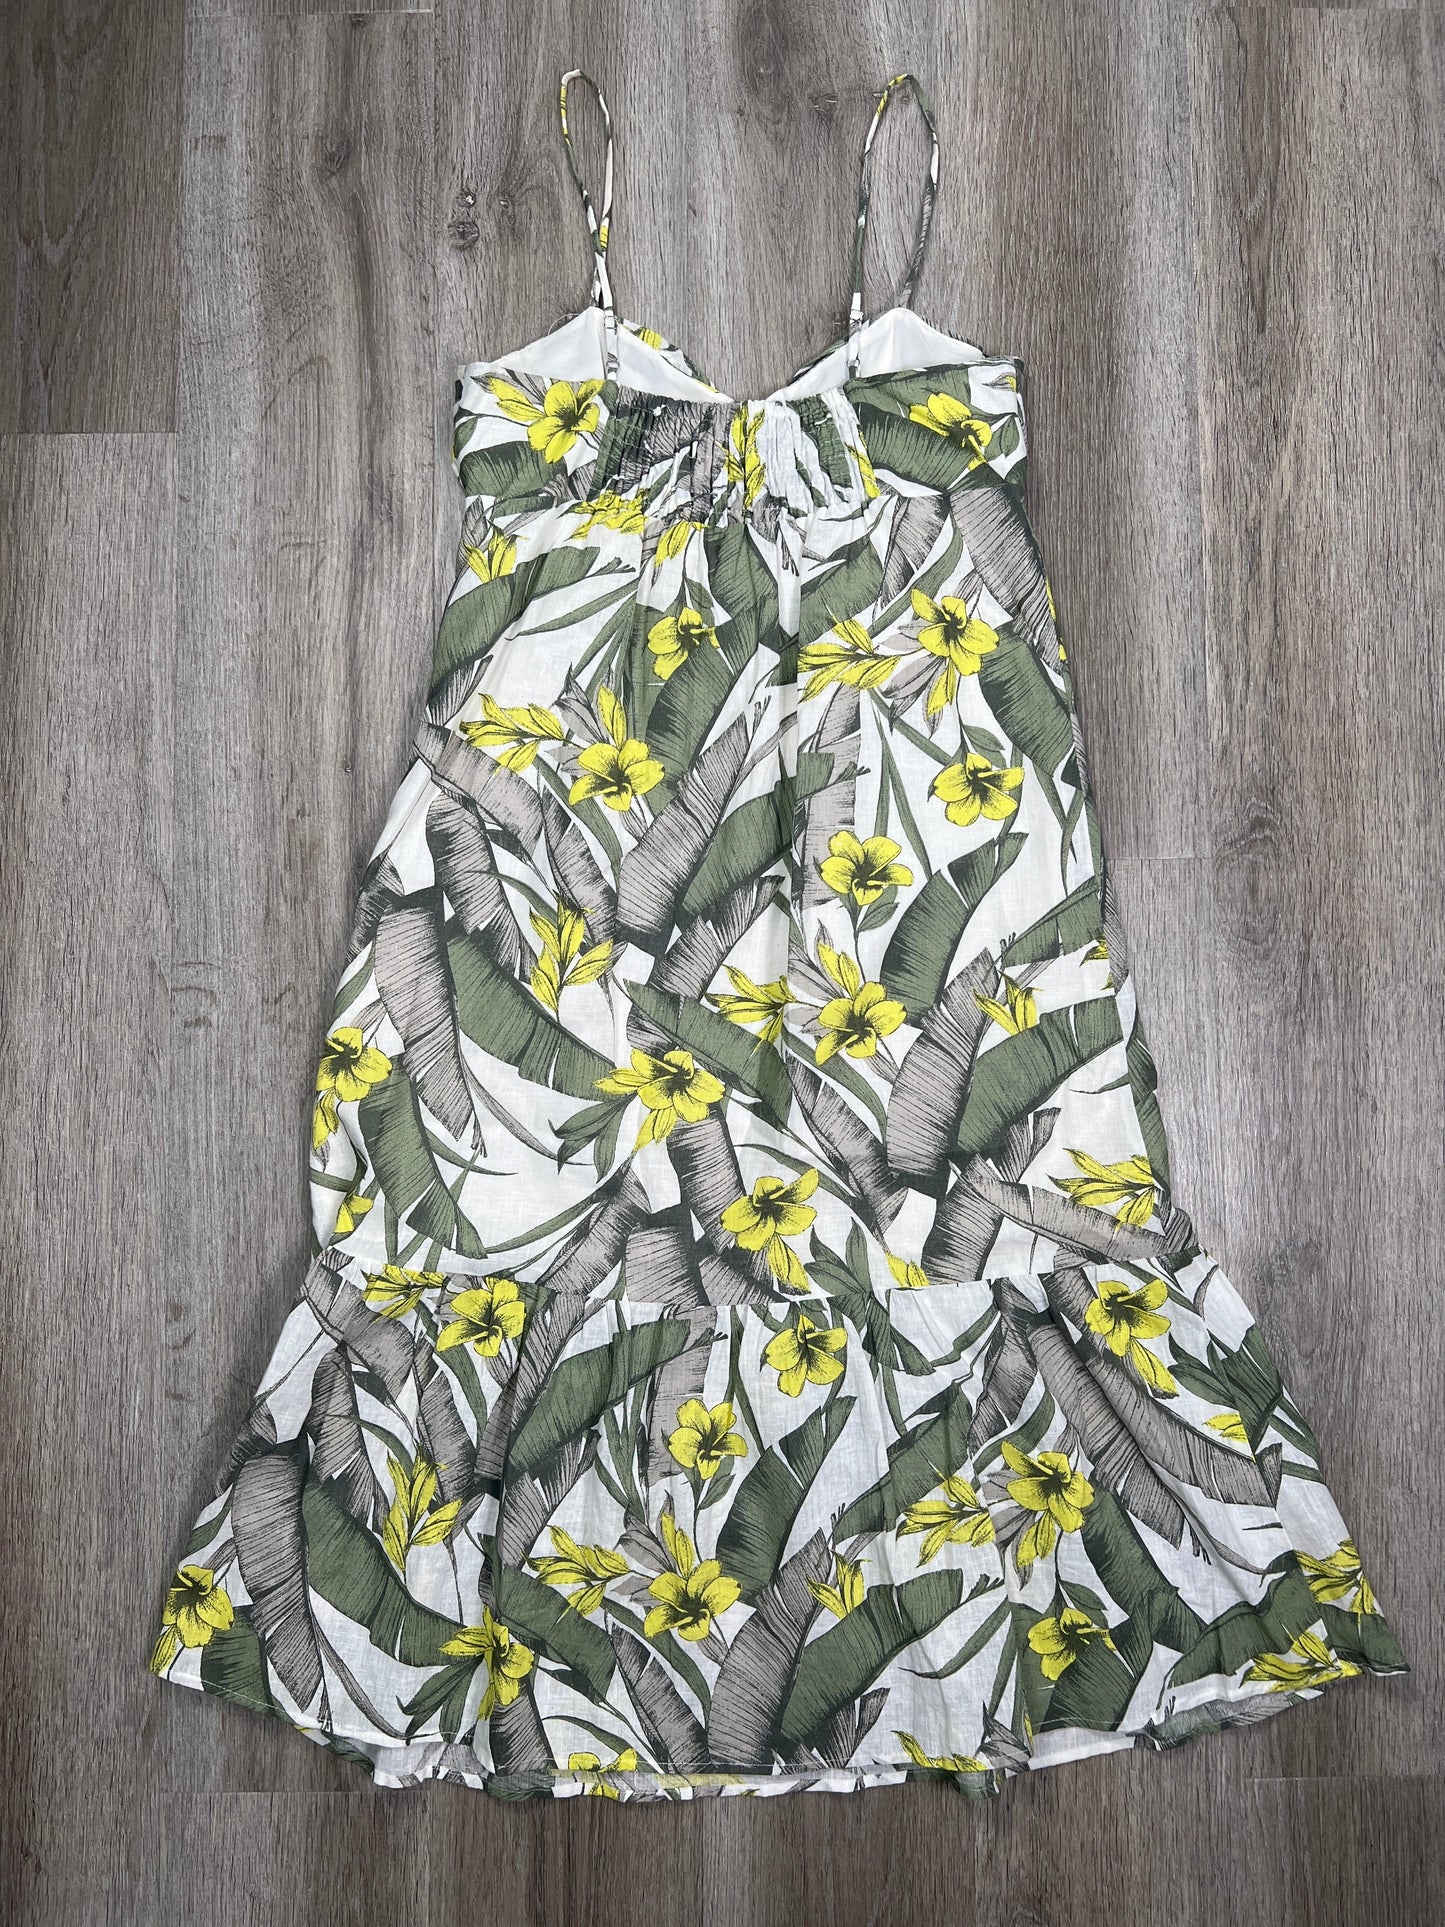 Floral Print Dress Casual Midi Banana Republic, Size S